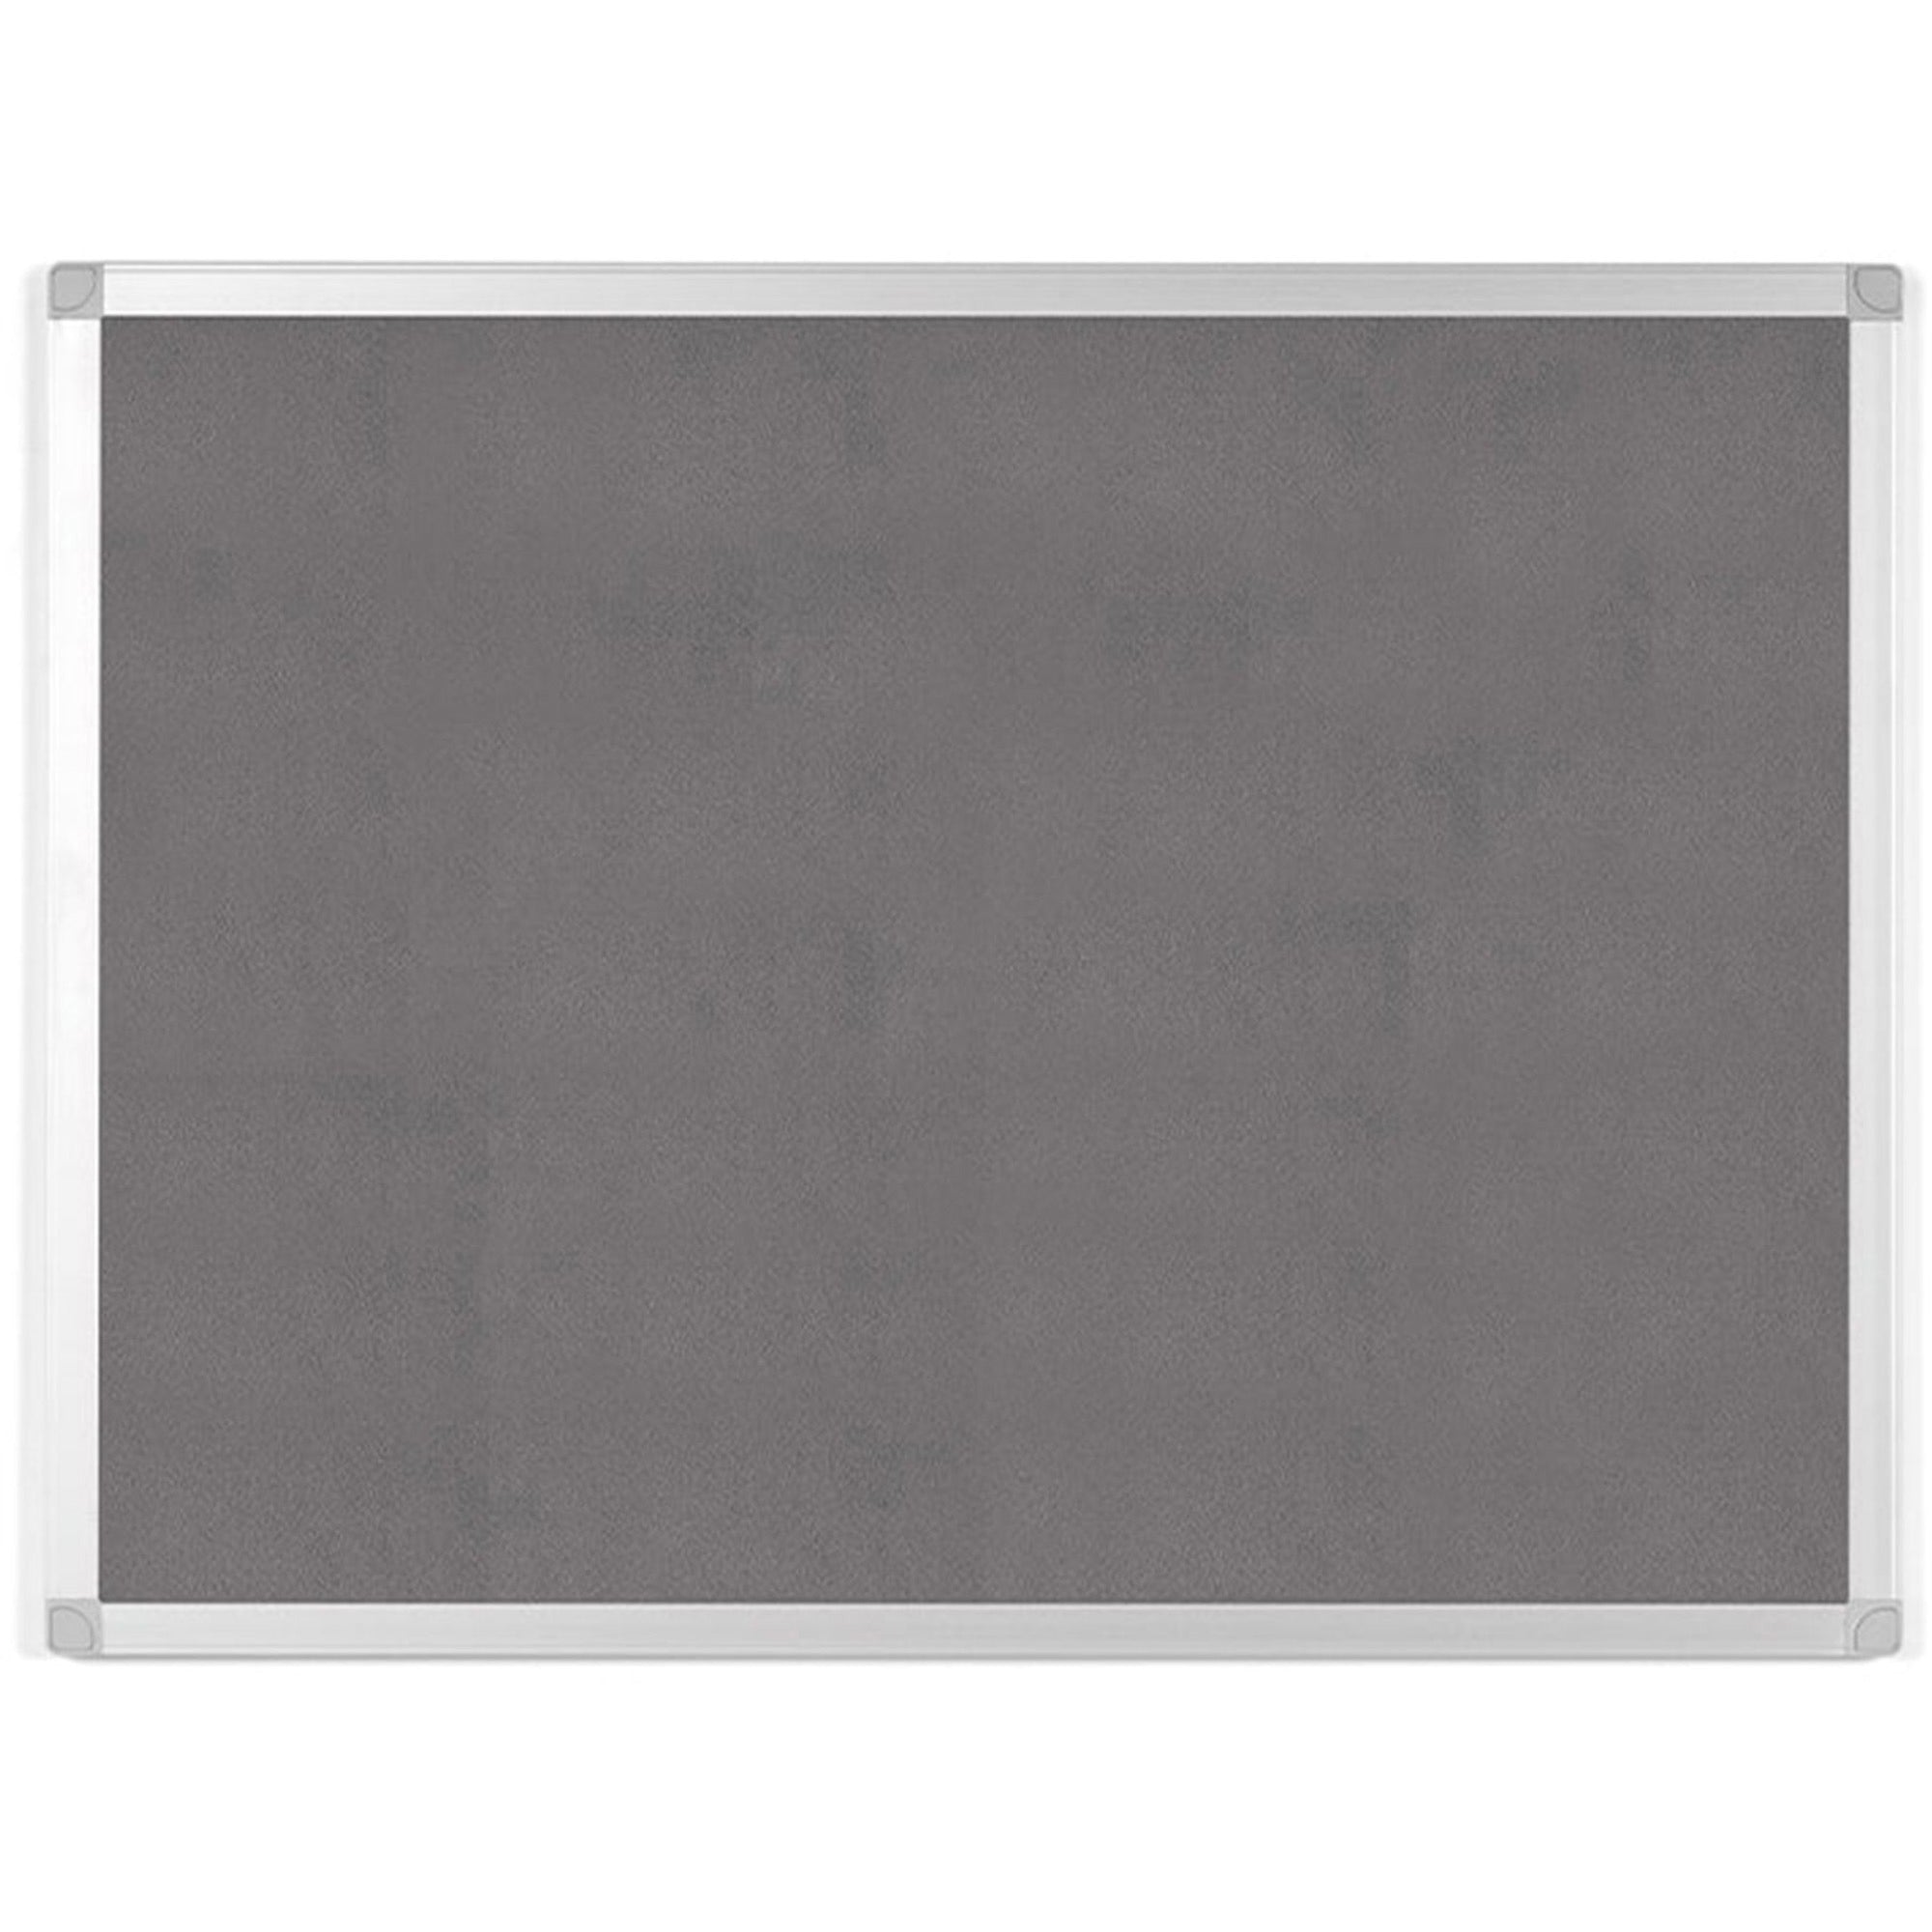 bi-silque-ayda-fabric-24w-bulletin-board-gray-fabric-surface-robust-tackable-sleek-style-1-each-05-x-24_bvcfa03429214 - 1